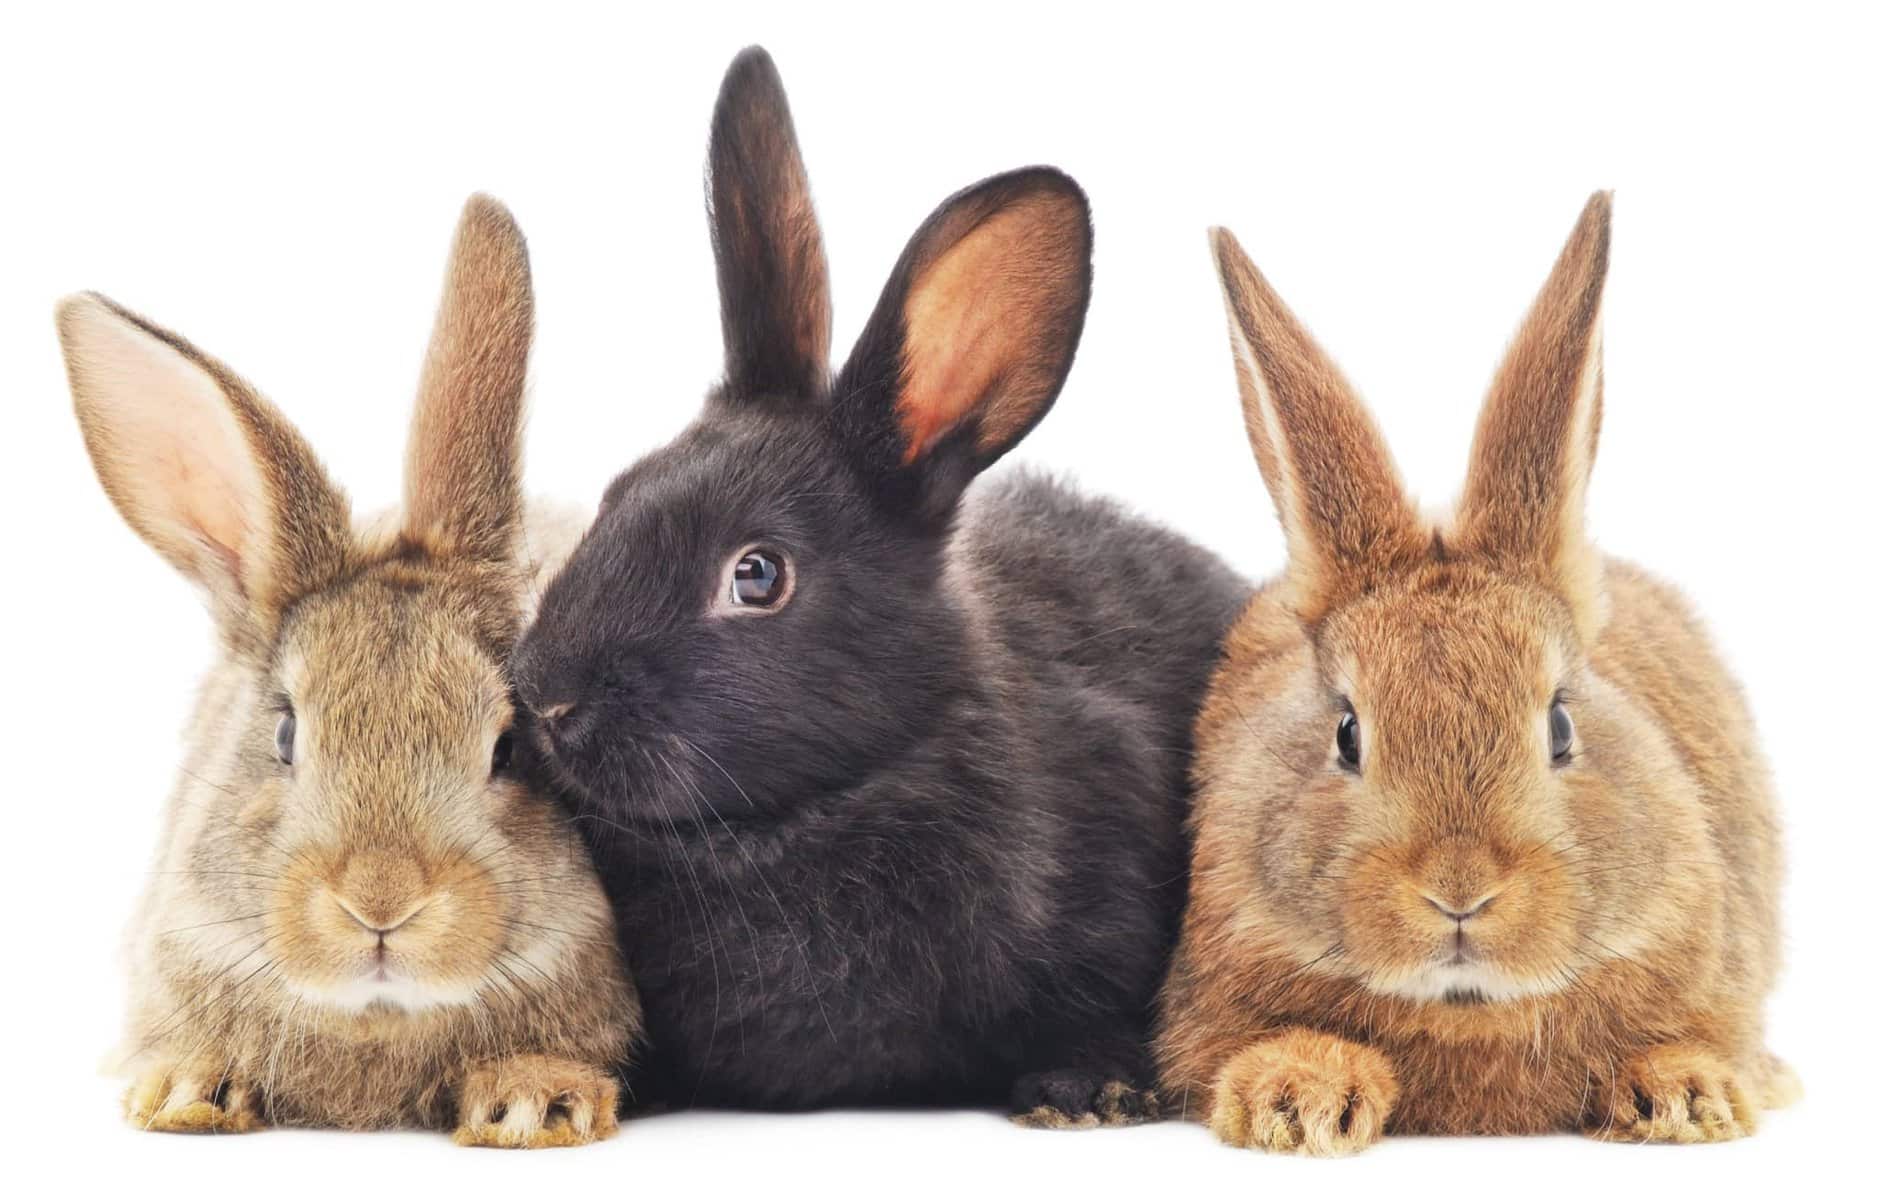 Isolated image of a three bunny rabbits.